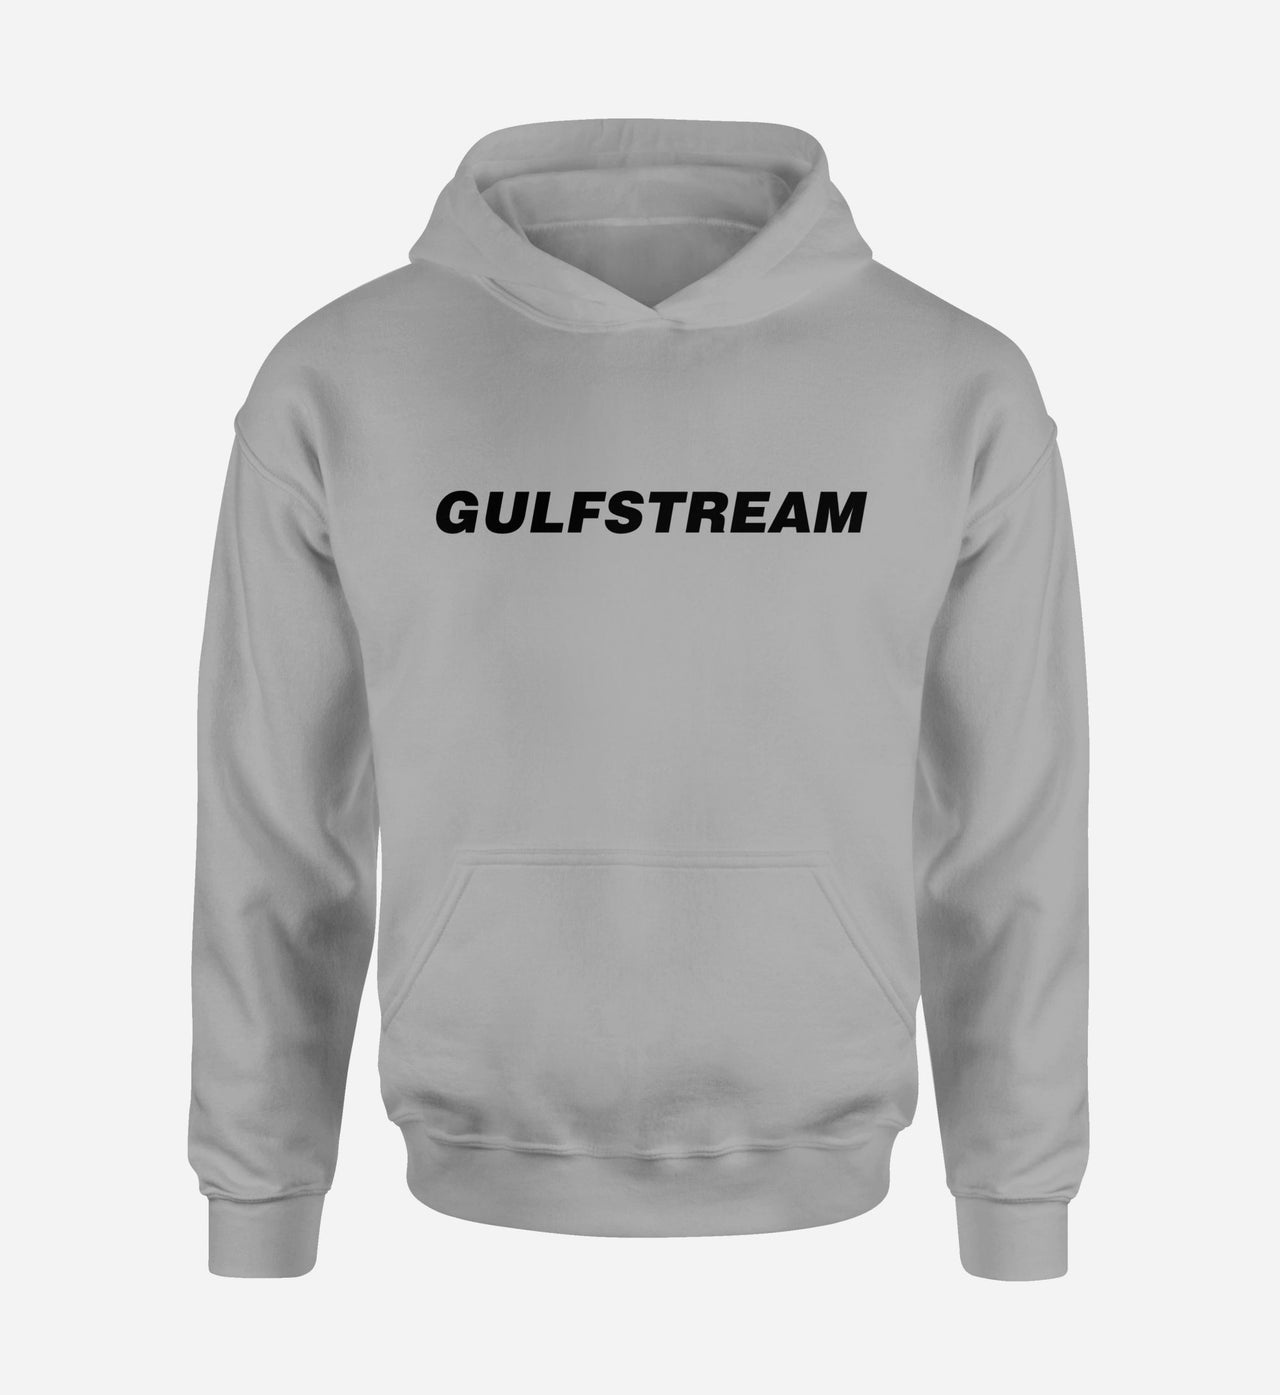 Gulfstream & Text Designed Hoodies